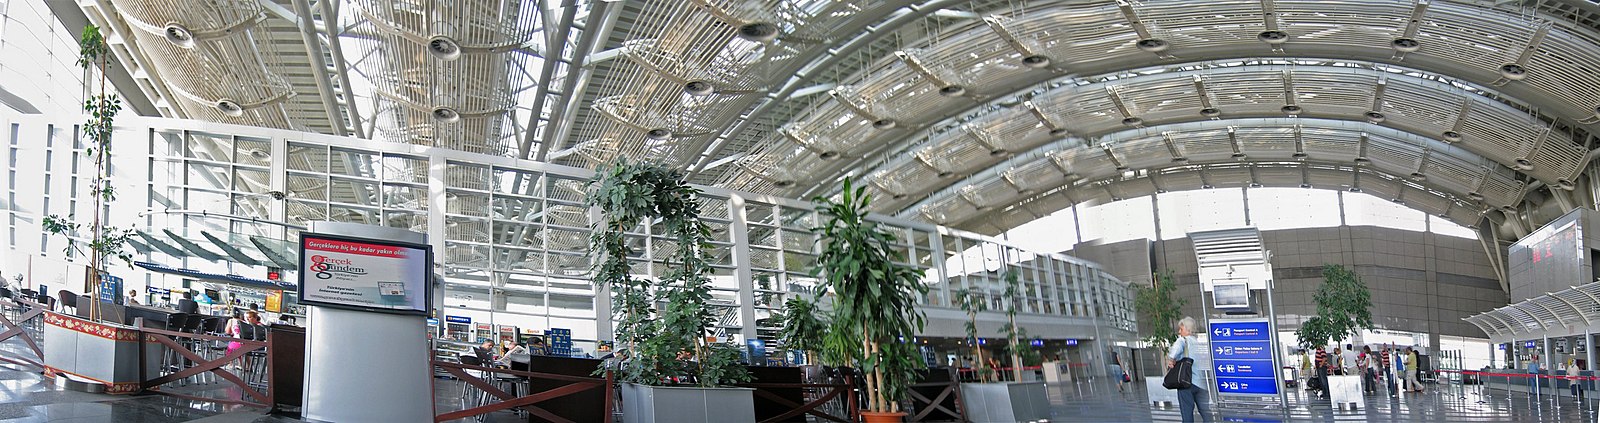 Сабиха Гекчен аэропорт Plaza Premium Lounge. Терминал Сабиха гегсен. Kozen p12 терминал. Аэропорт сабиха гекчен вылет